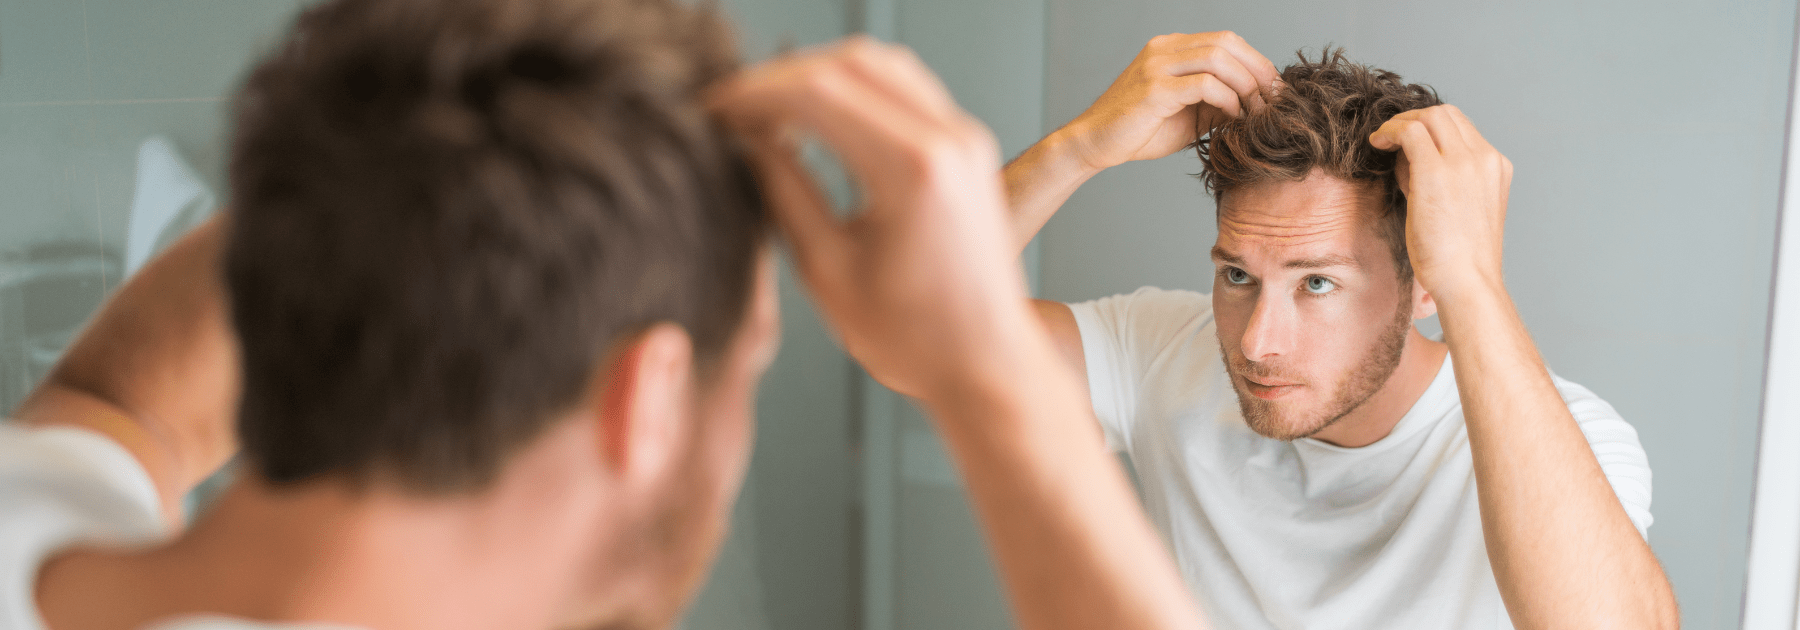 hair loss treatments men